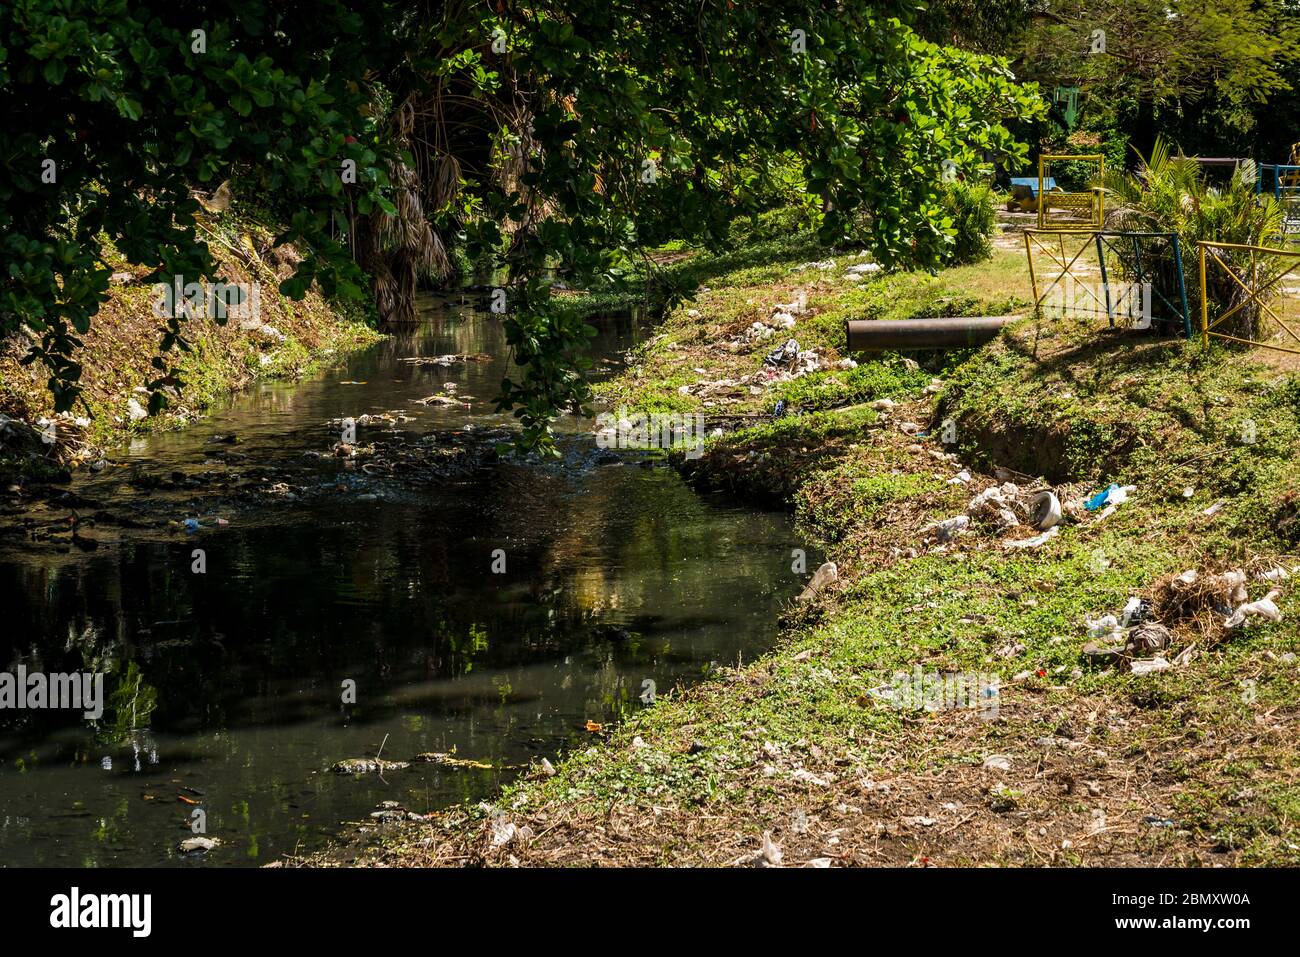 Rubbish thrown into the river, Santa Clara, Cuba Stock Photo